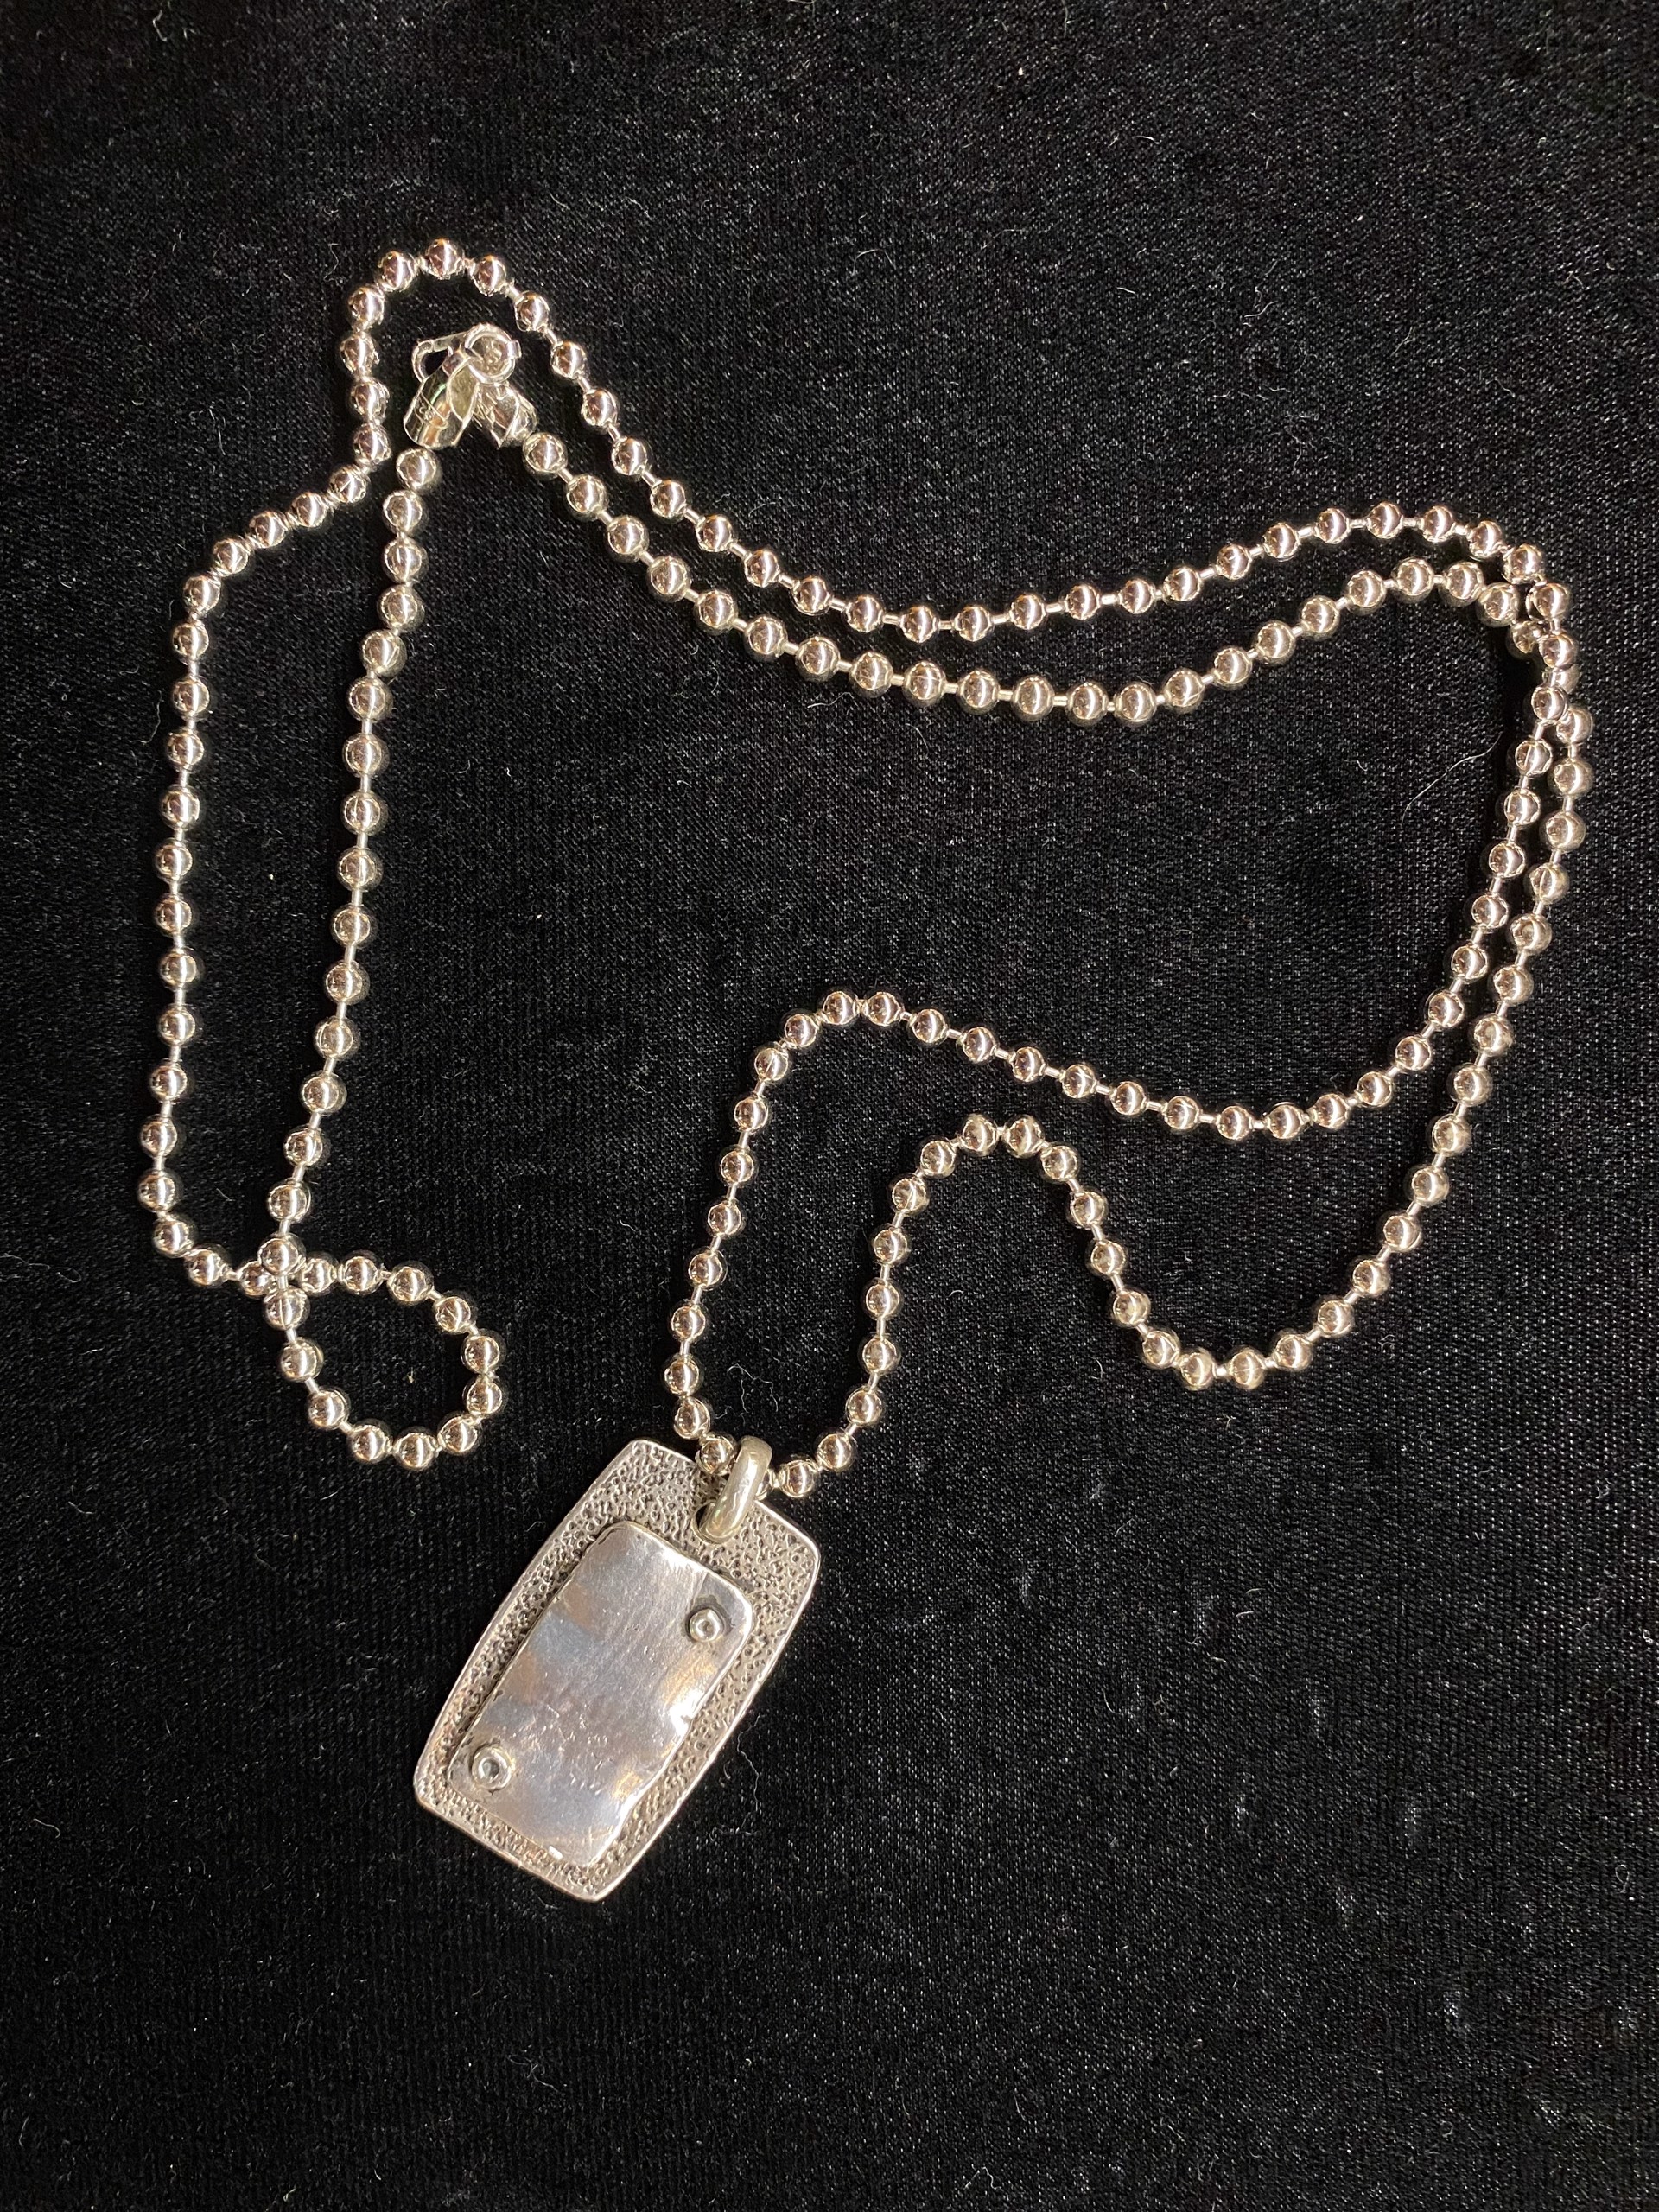 Sterling silver dog tag necklace by Jeri Mitrani